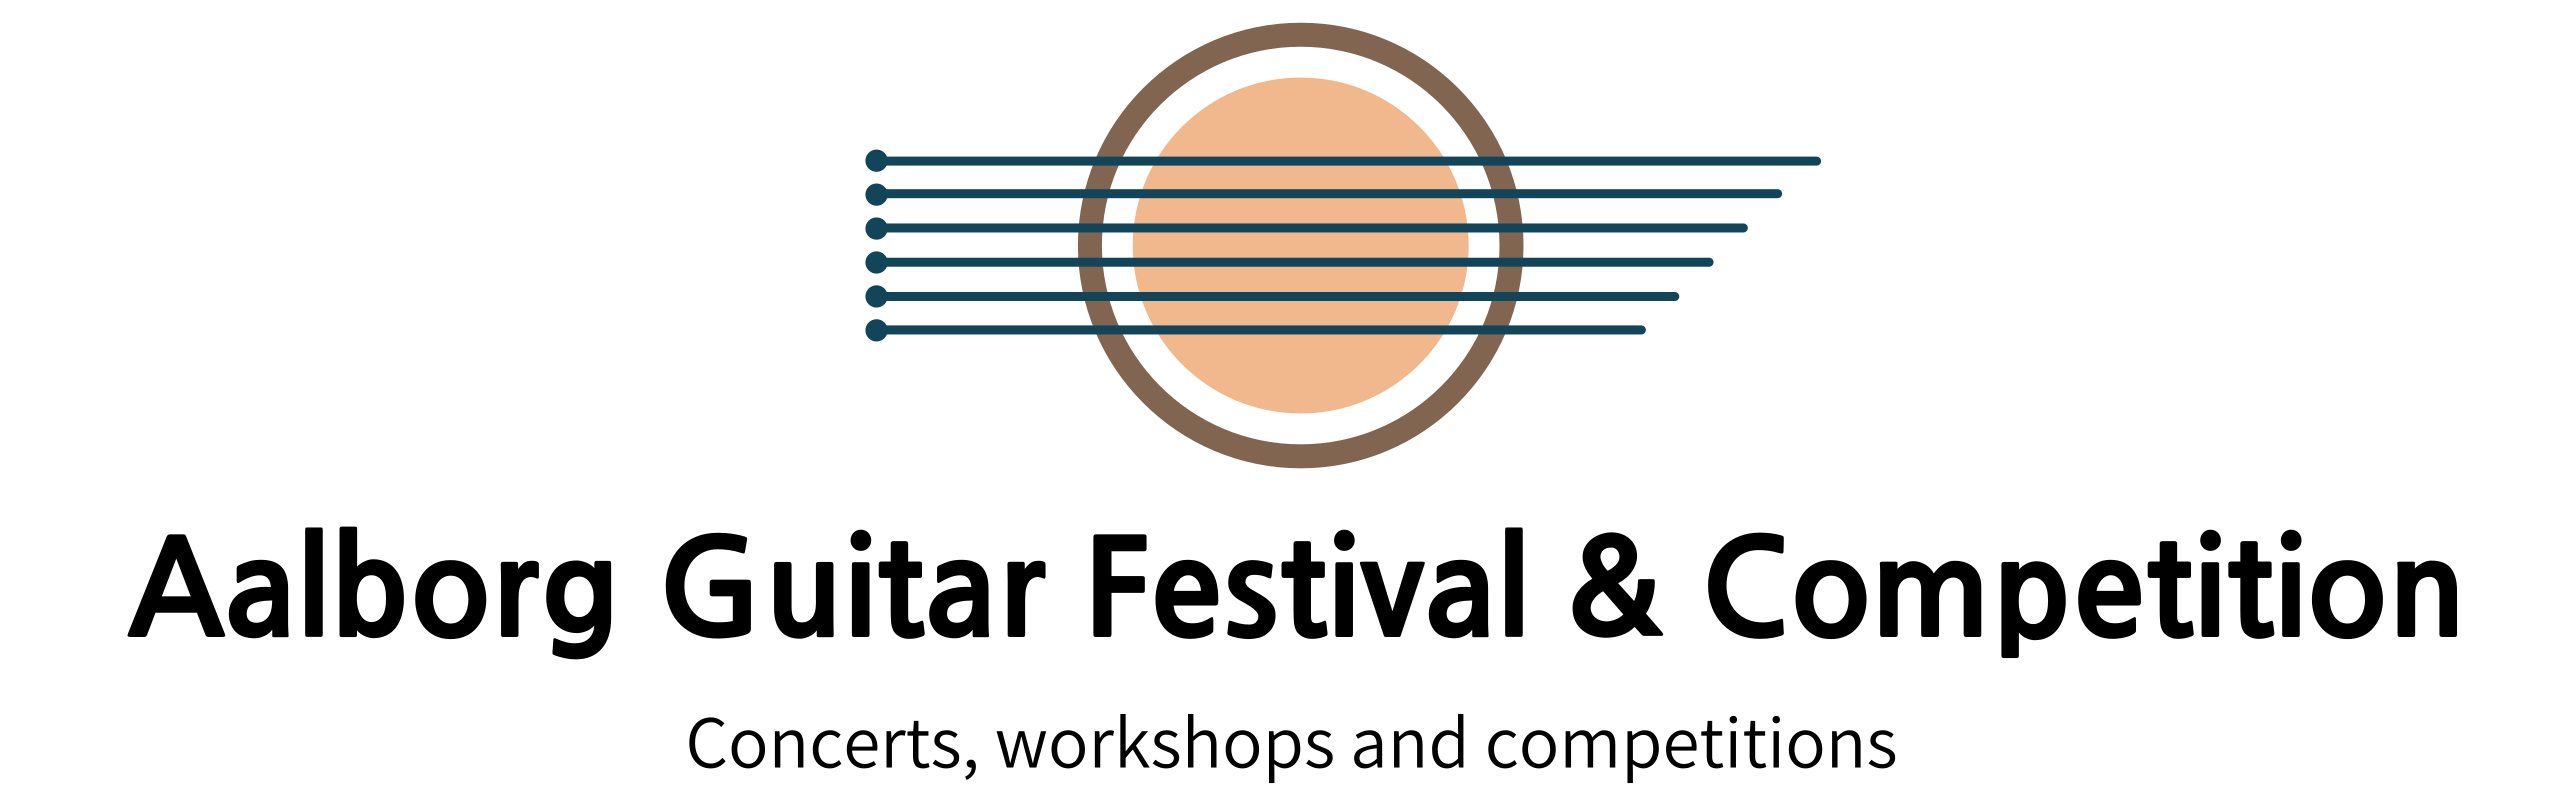 Composer Competition - image Transparent-Logo3 on https://aalborgguitarfestival.com